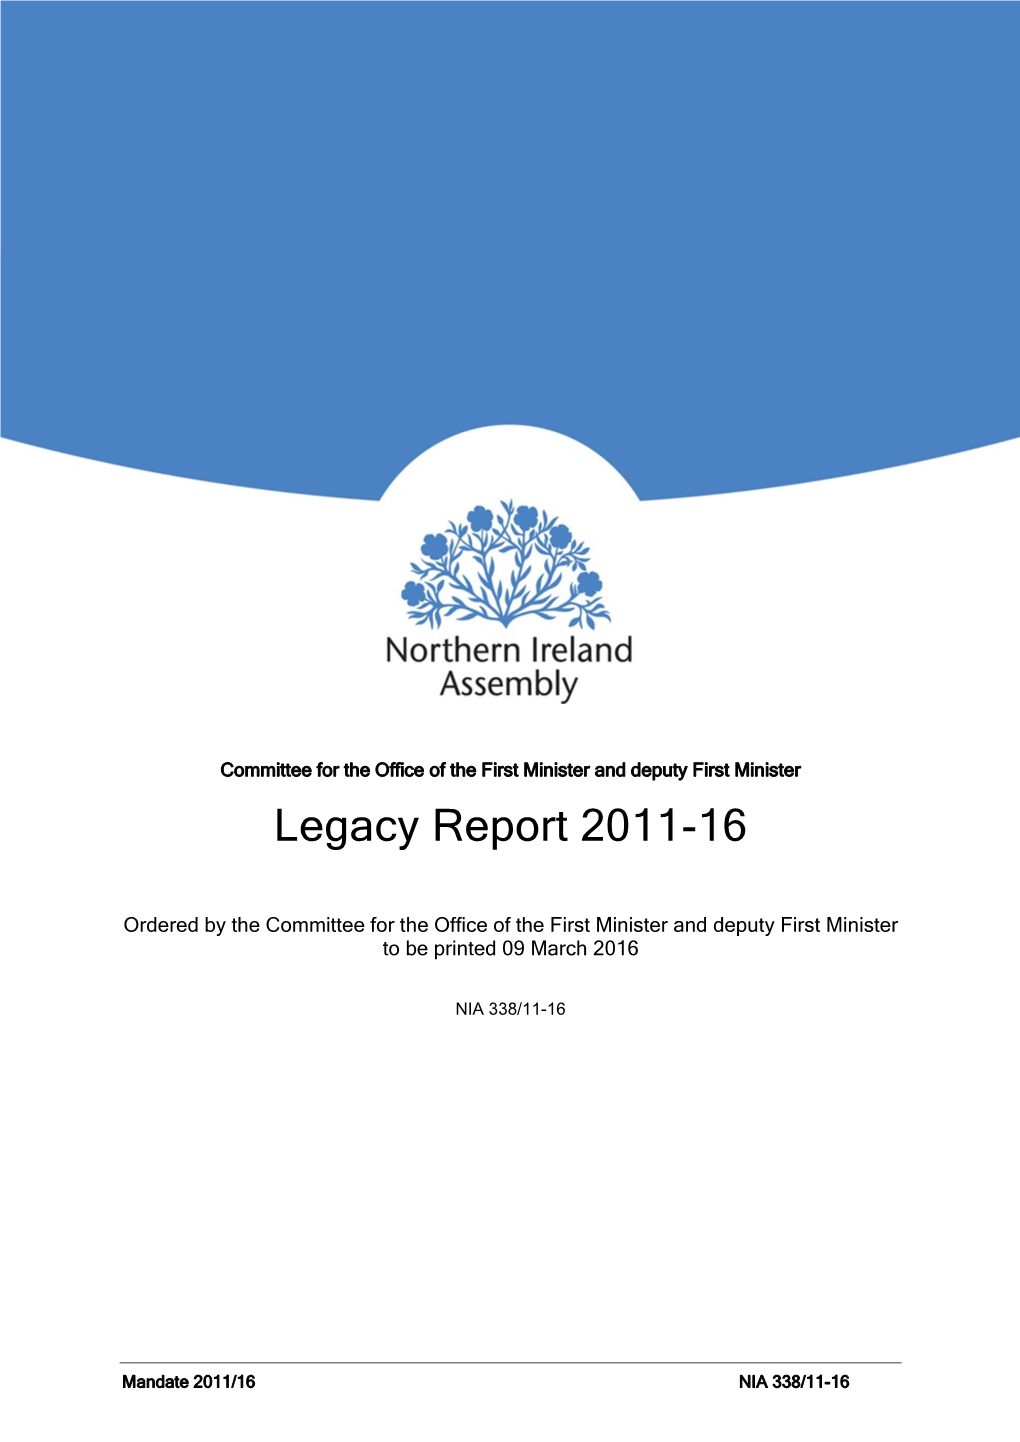 Legacy Report 2011-16